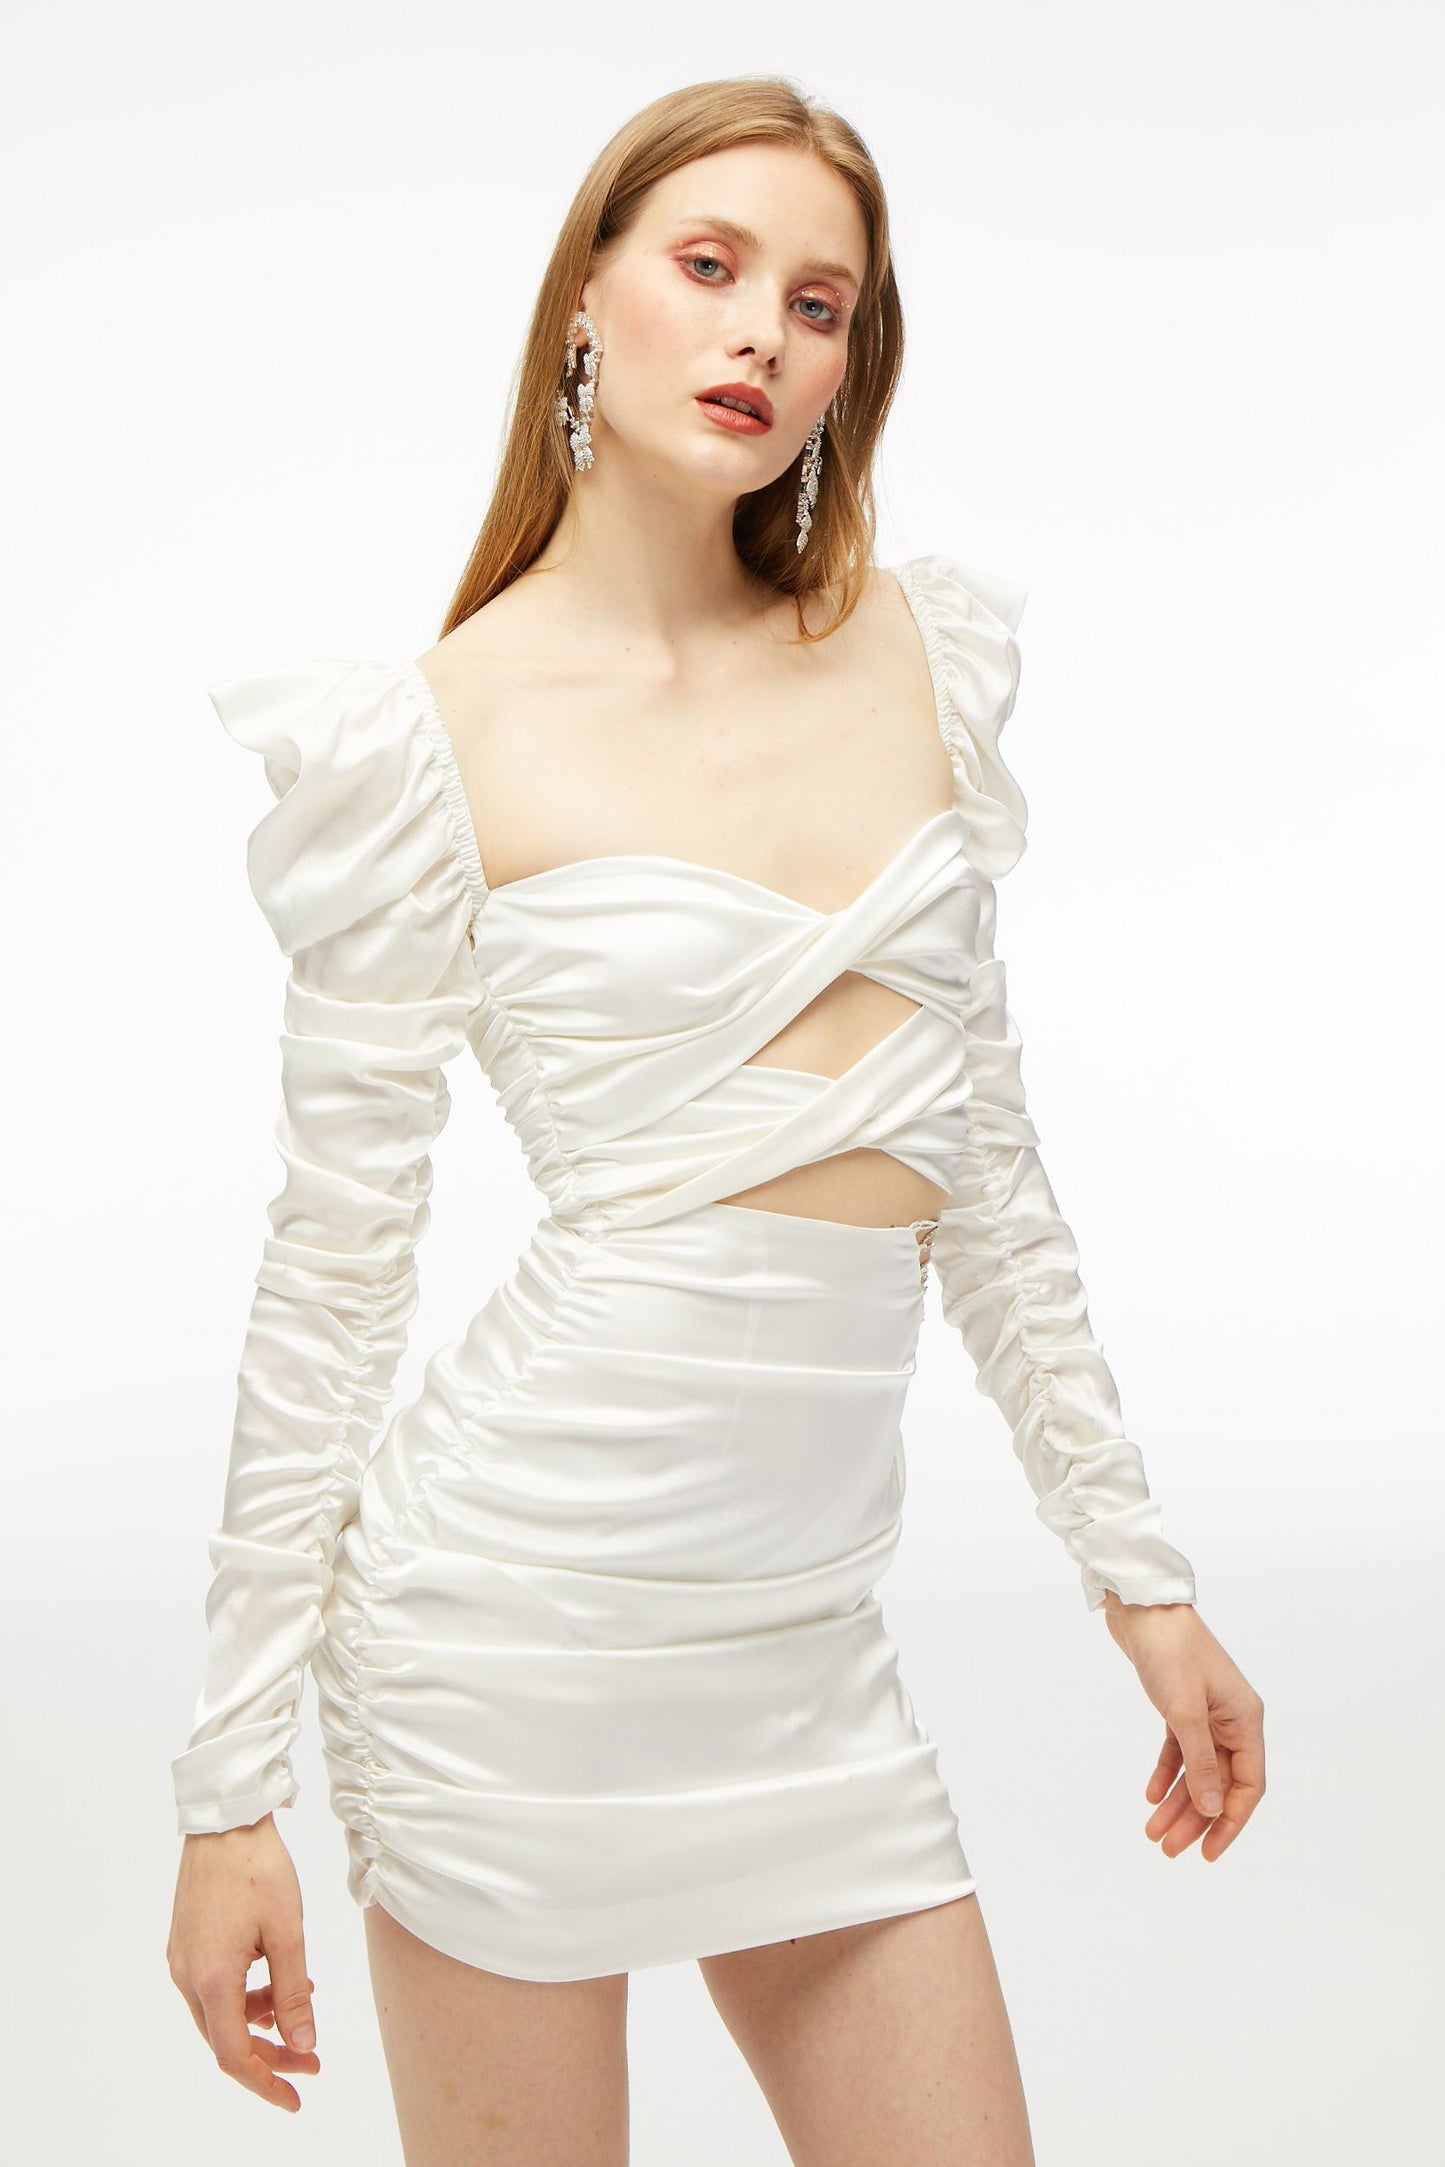 Bonnie sexy White Cross Crystal Dress - Nana Jacqueline